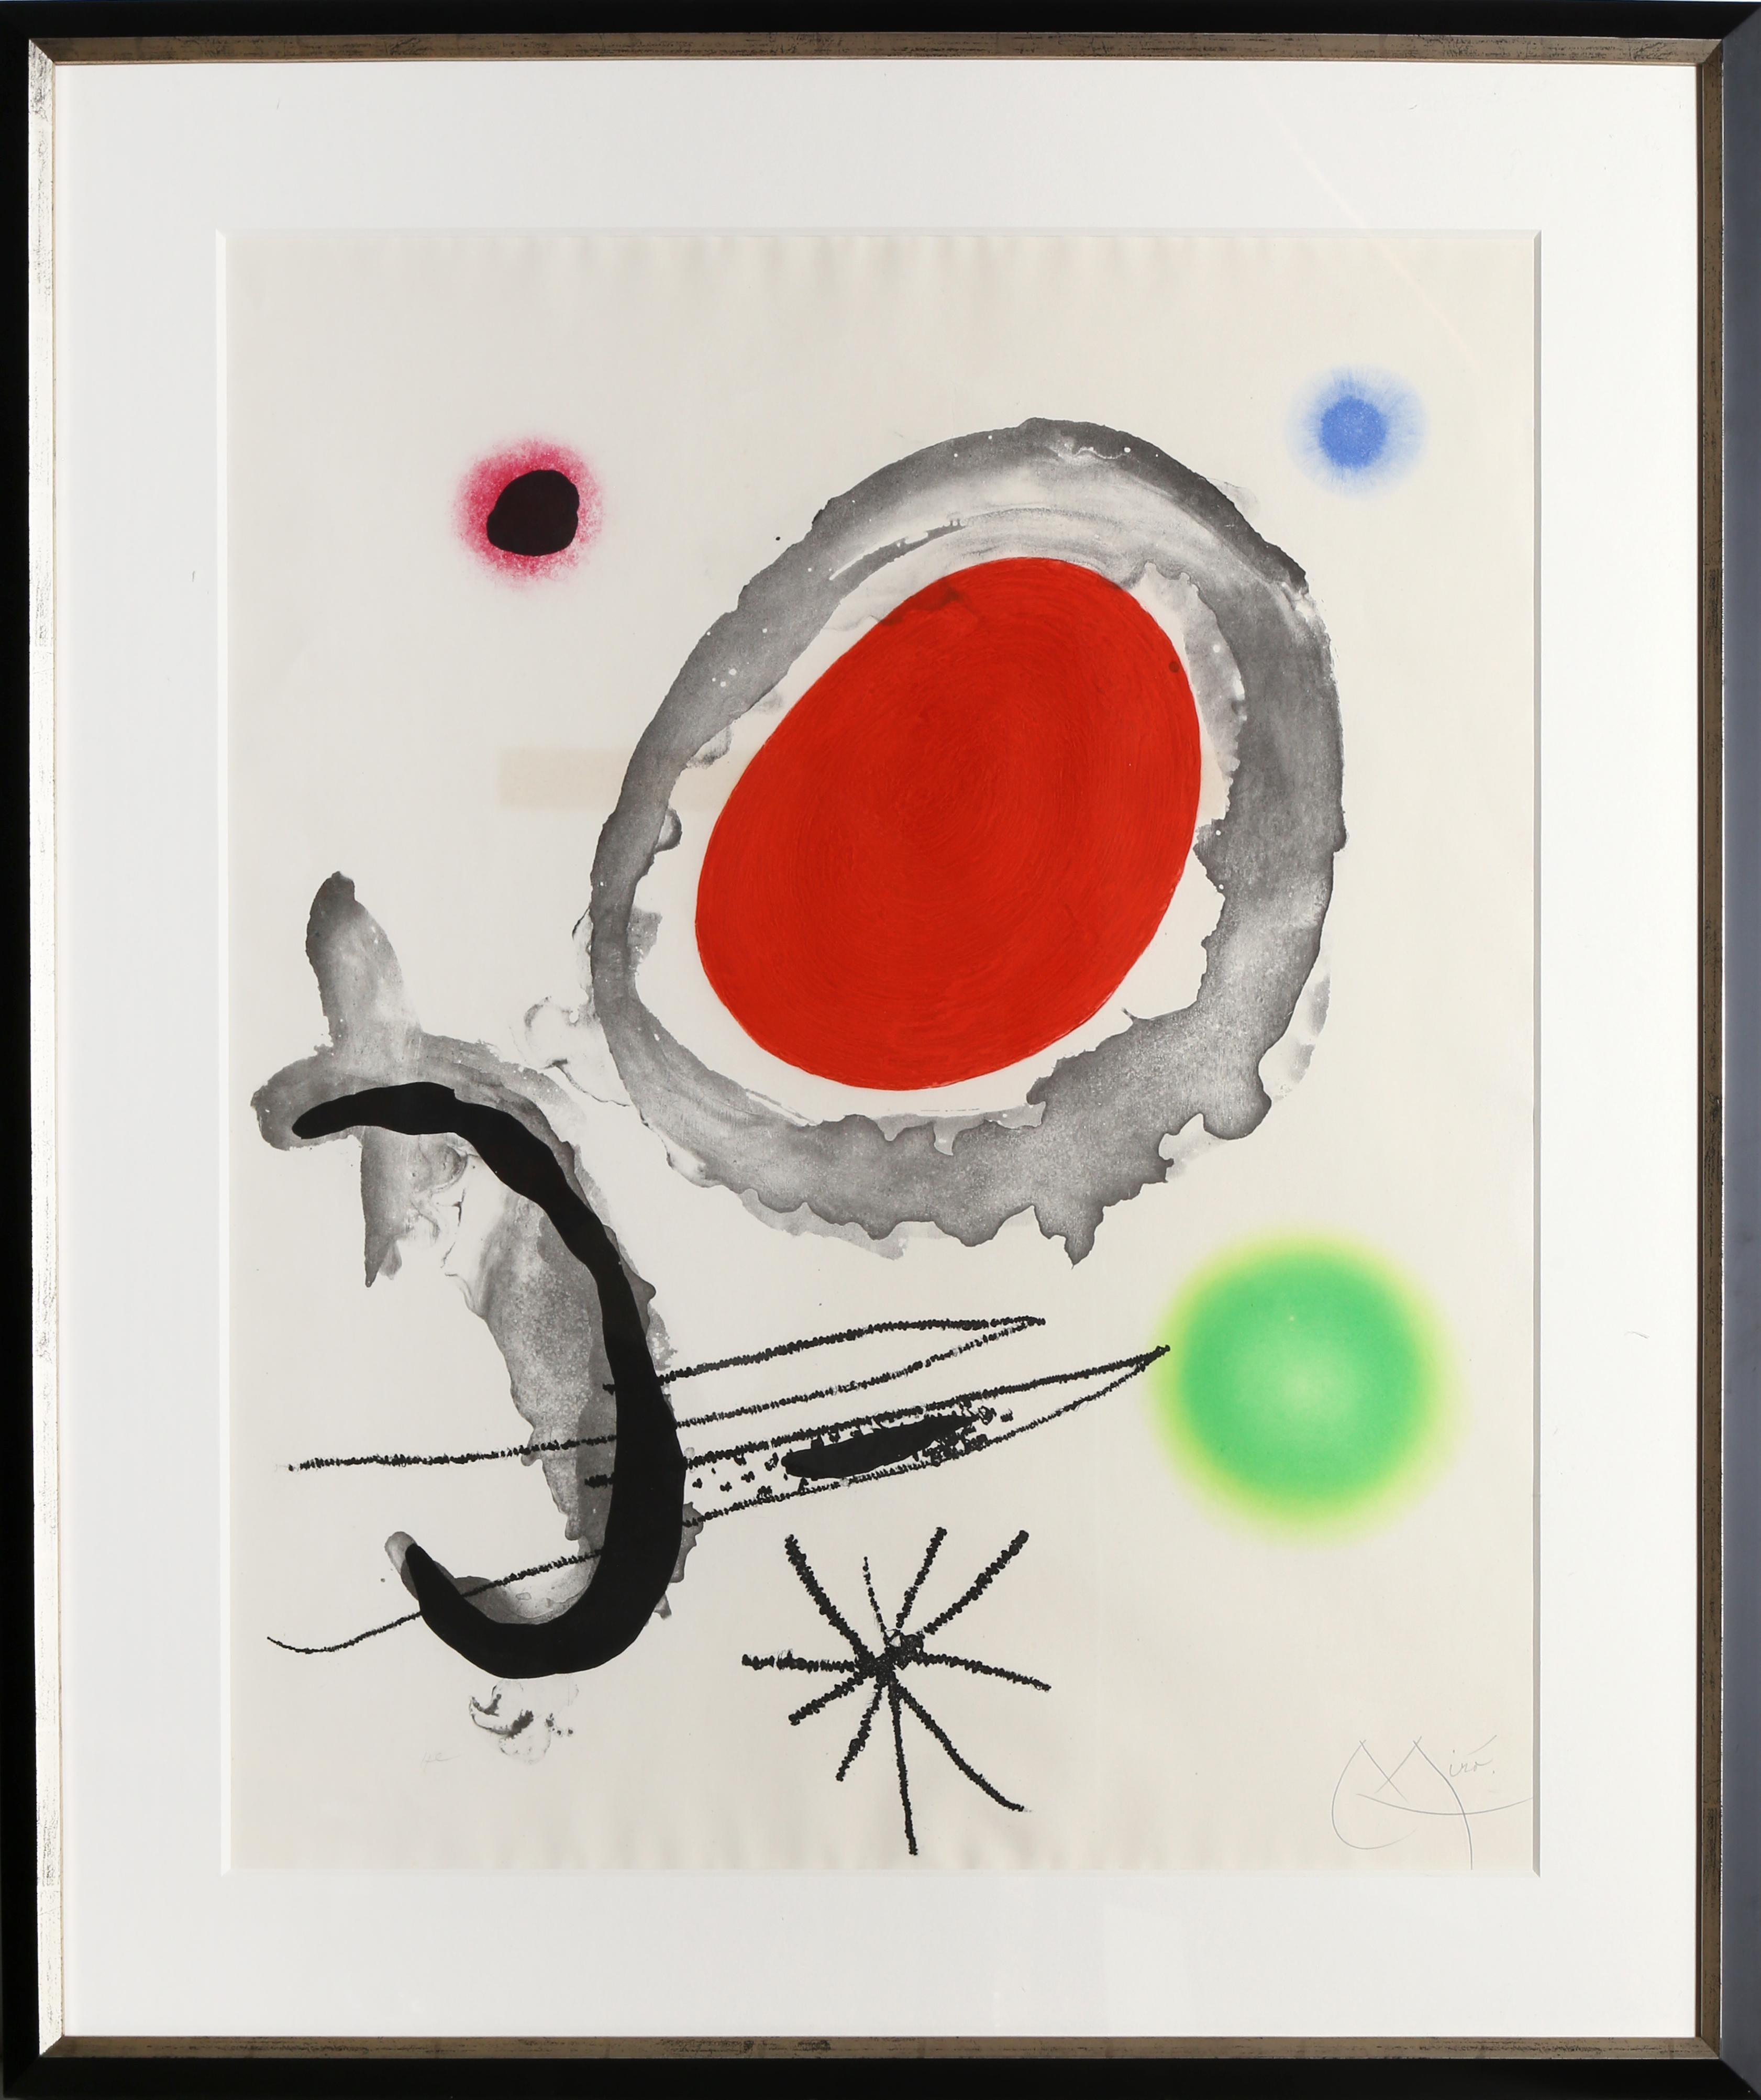 Joan Miró Abstract Print – Oiseau Entre deux Astres, gerahmte Radierung von Joan Miro, 1967